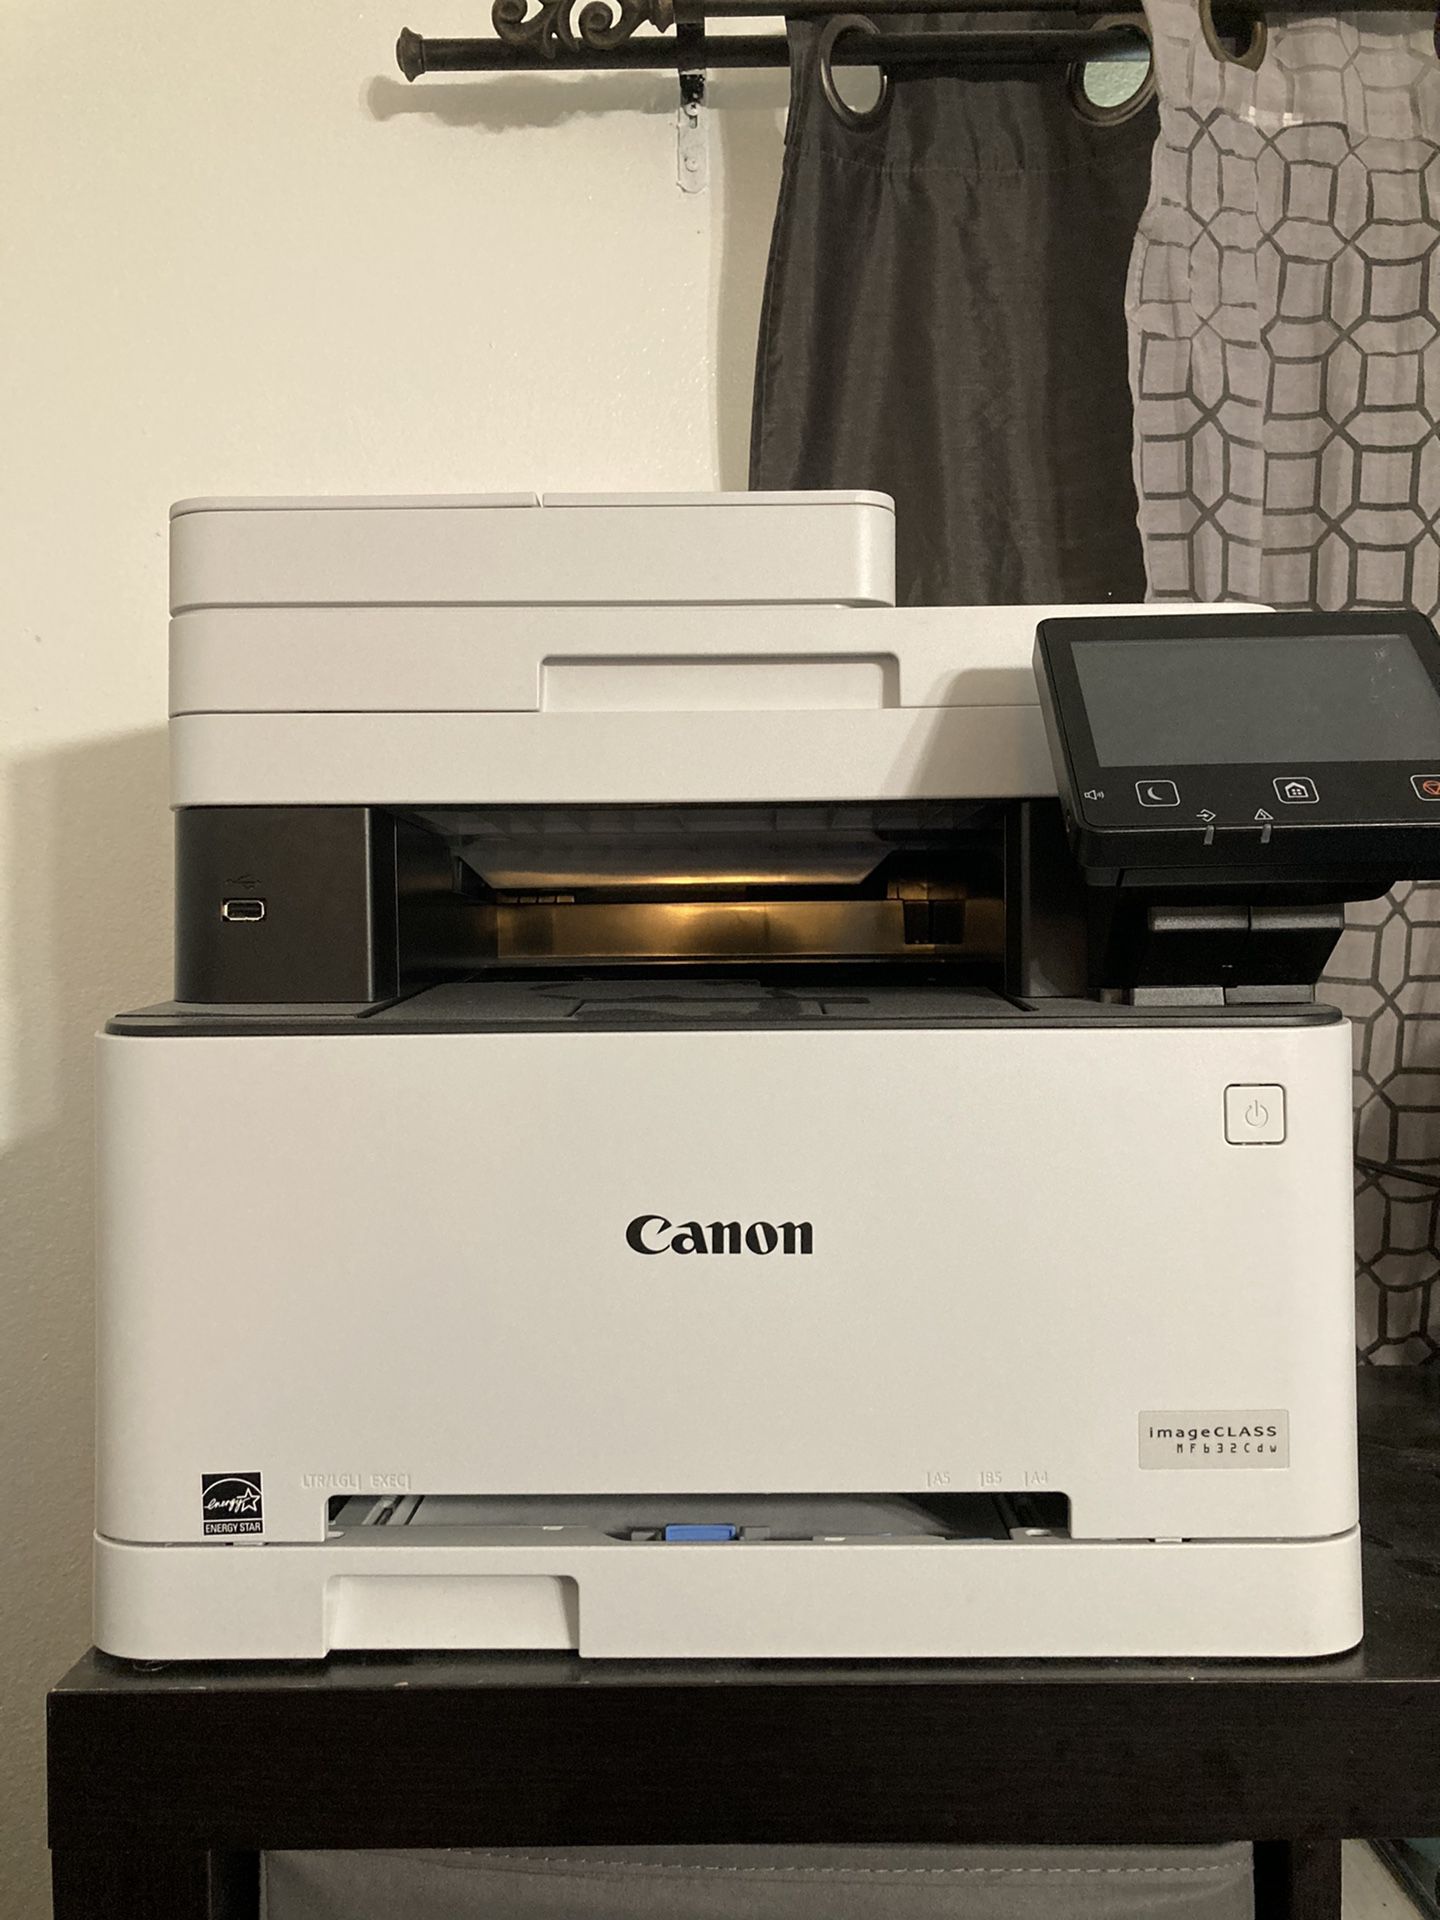 Canon MF632CDW printer scanner copier fax